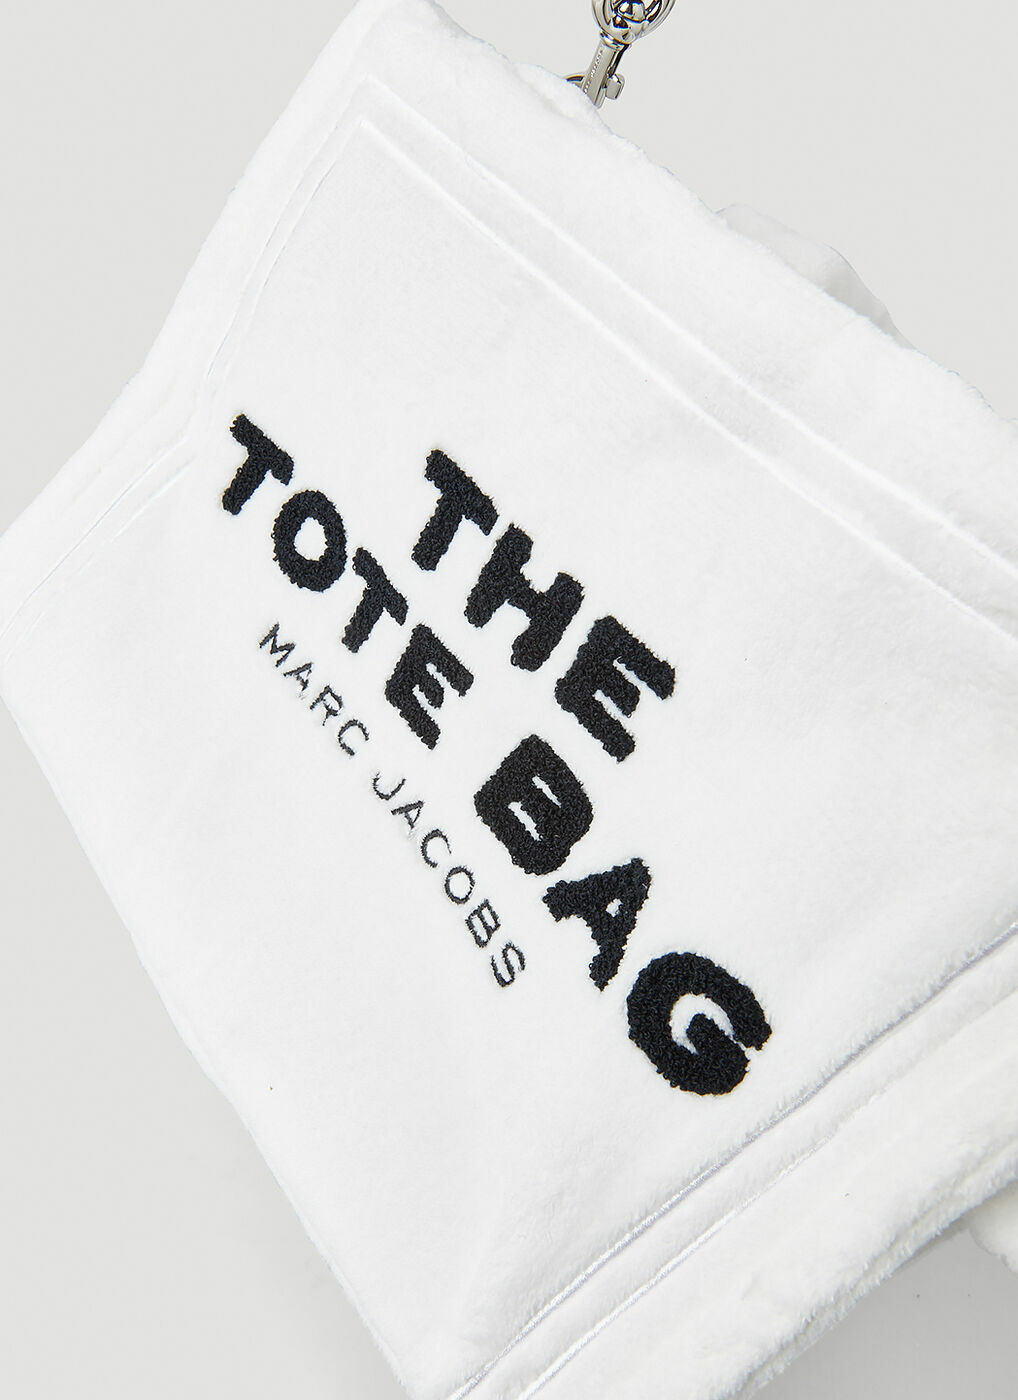 Marc Jacobs The Medium Terry Tote Bag Black